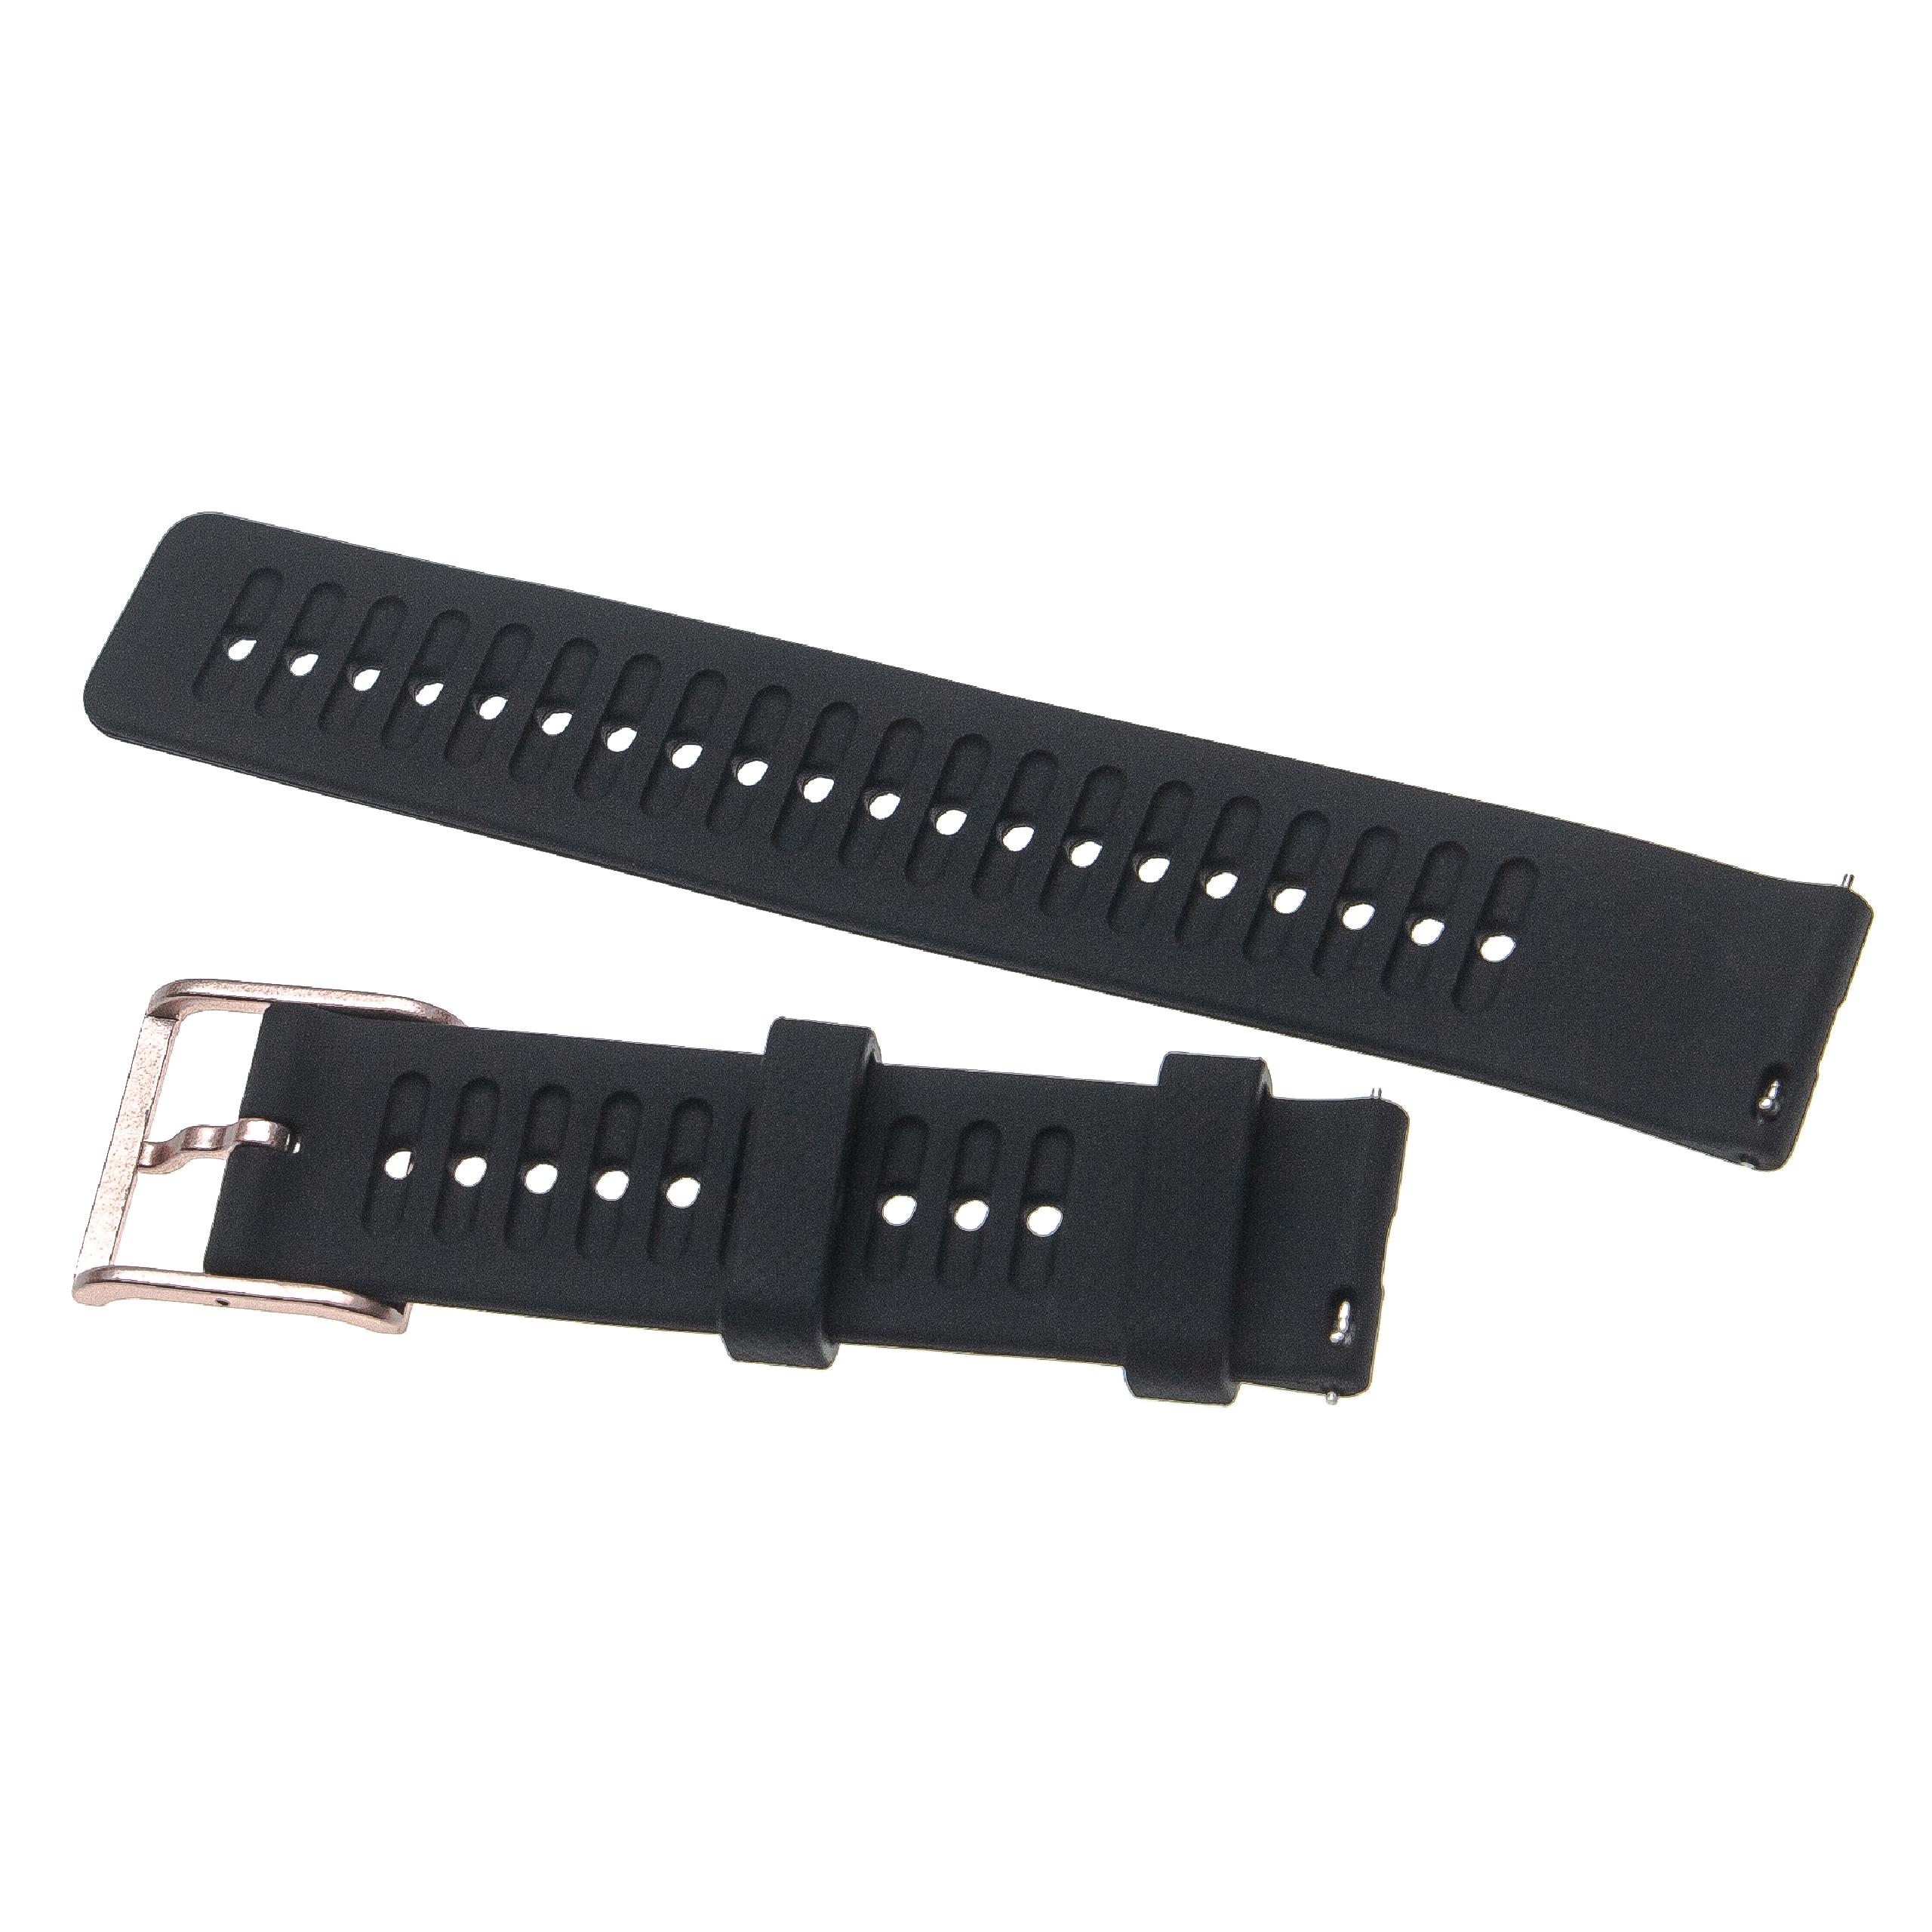 wristband for Polar Smartwatch - 12.8 + 9.1 cm long, 20mm wide, silicone, black, rosa-metallic